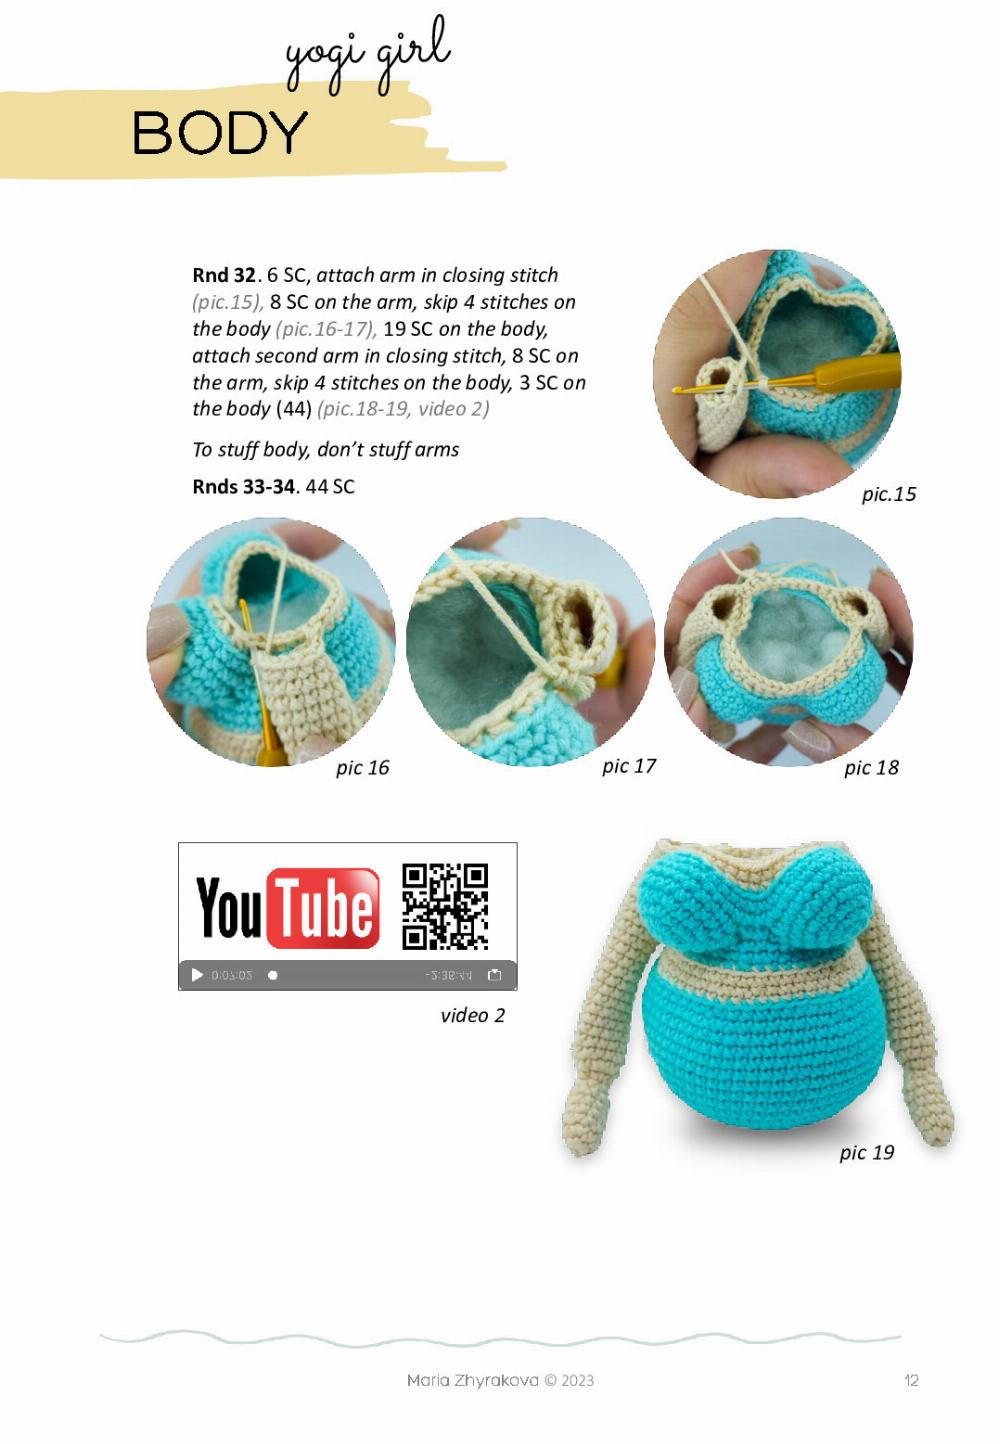 yogi girl doll crochet pattern